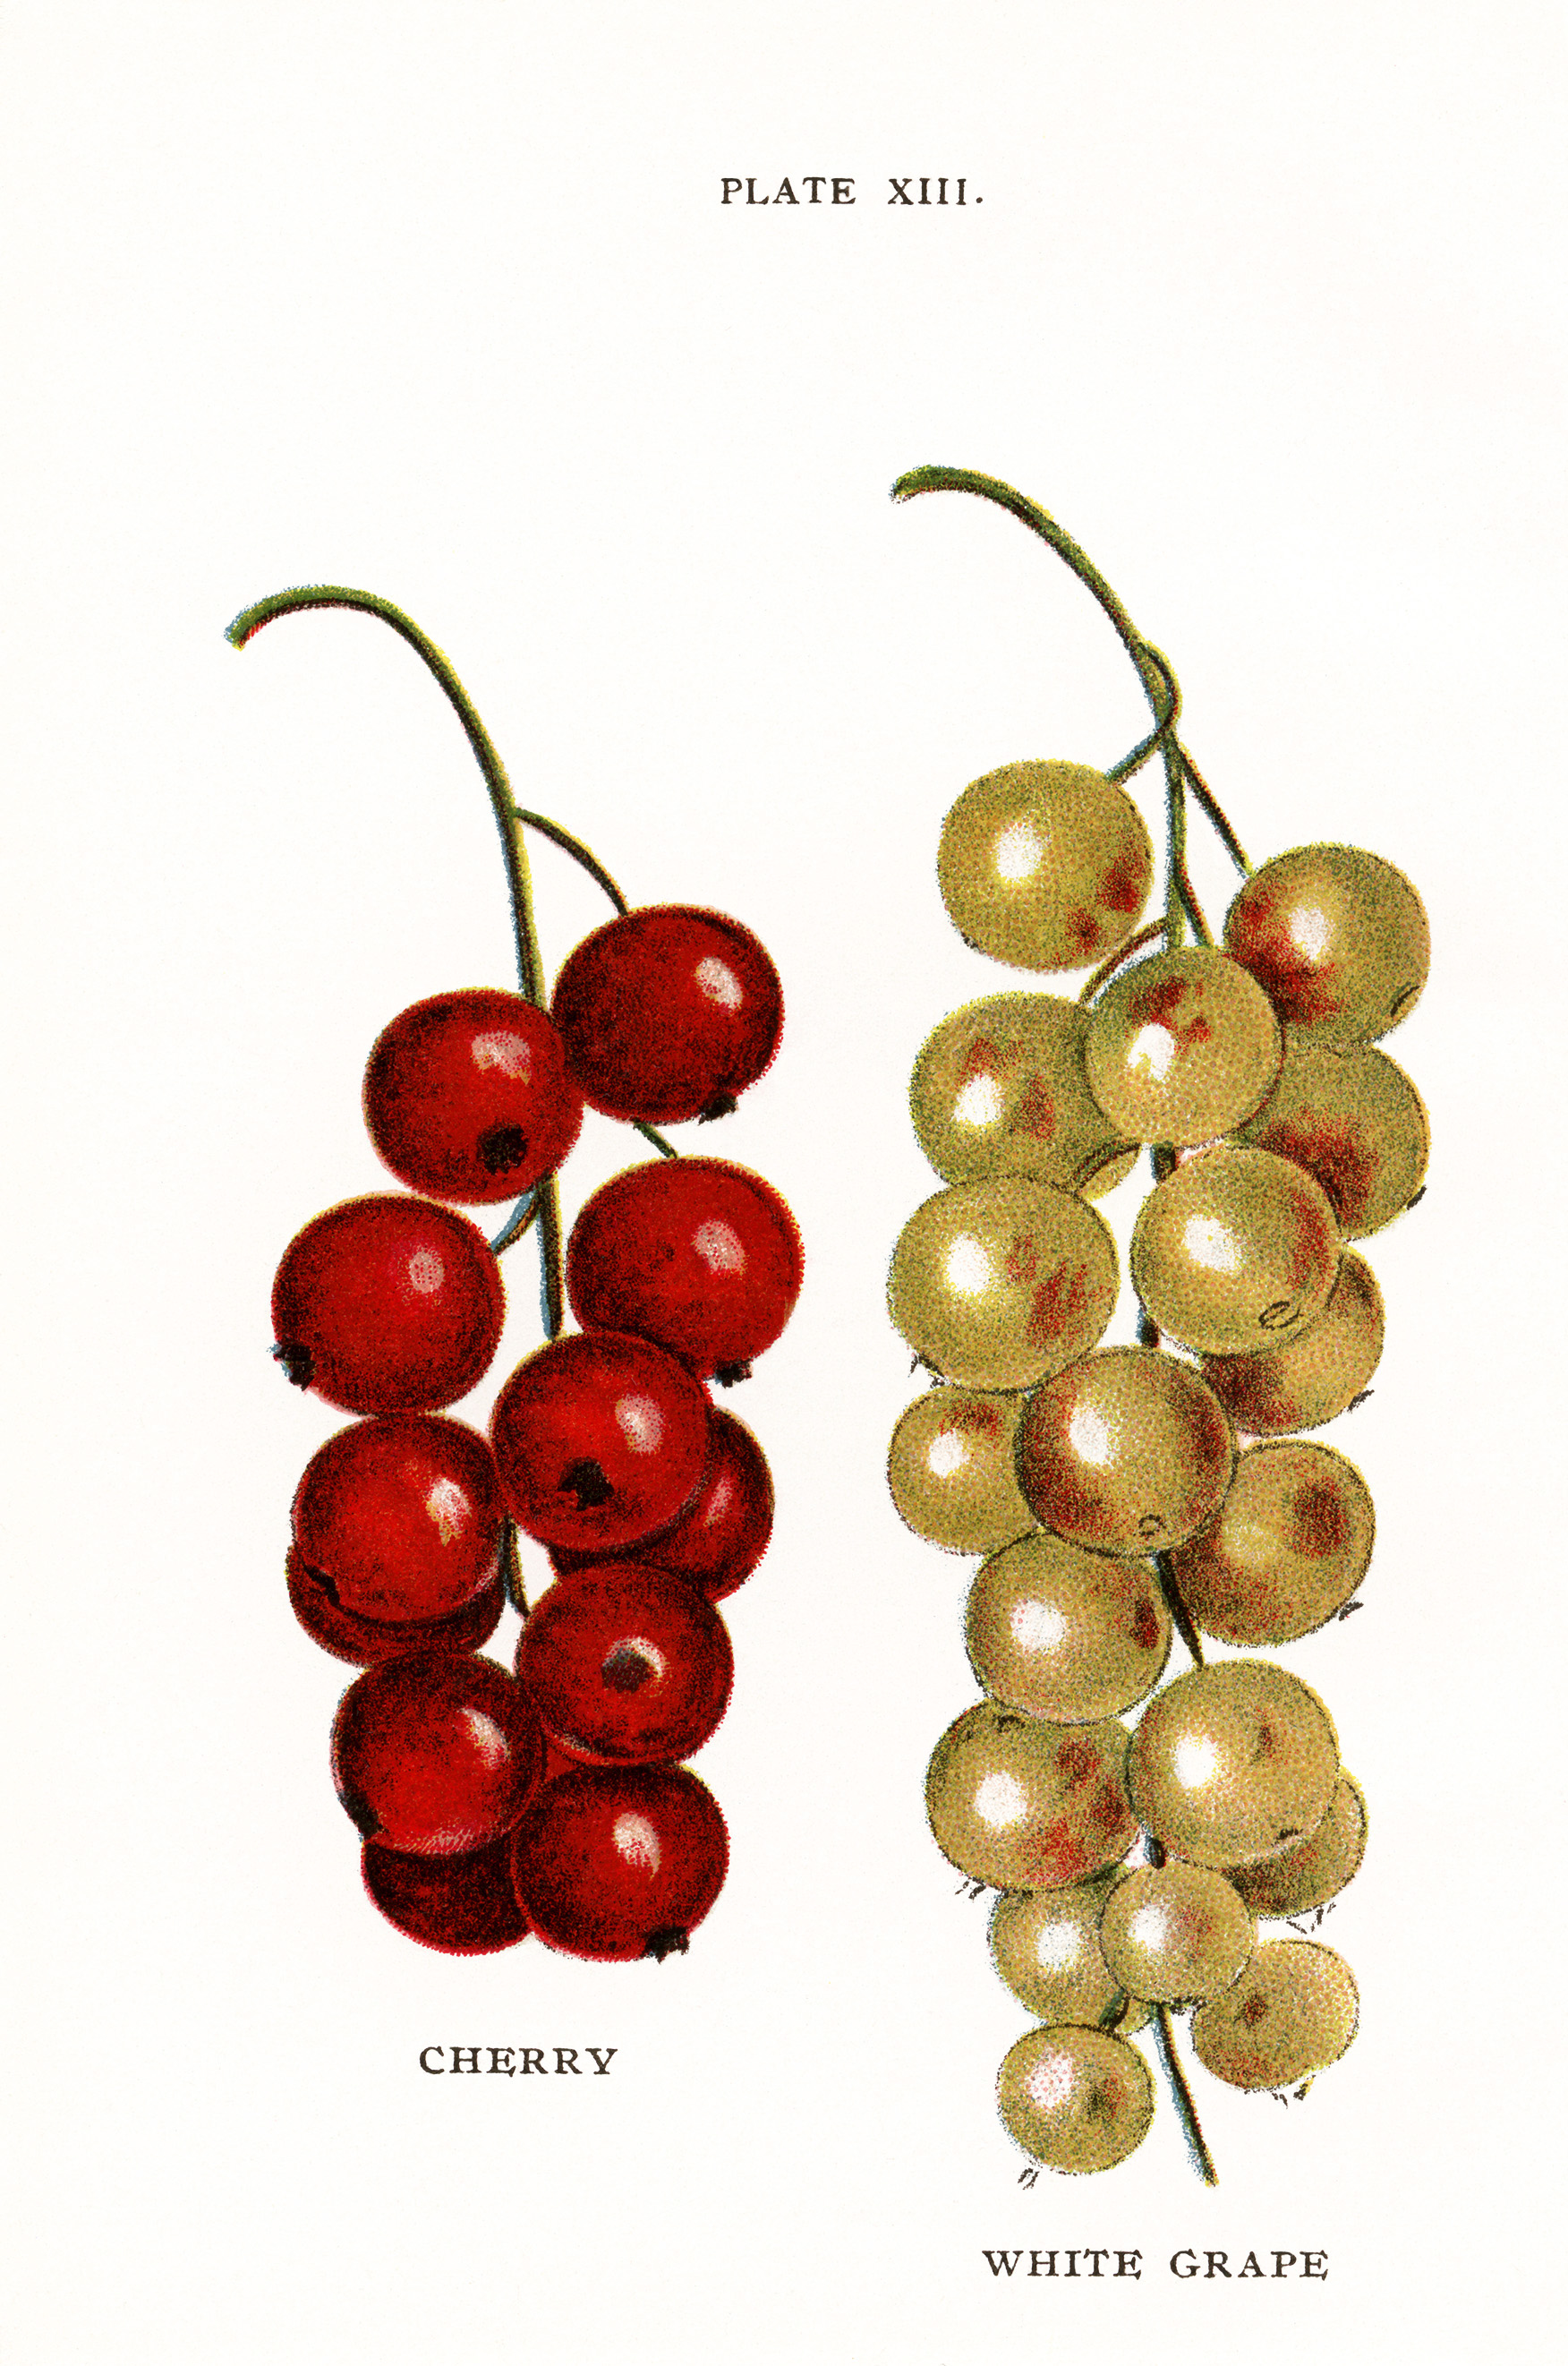 jacob biggle berry book image, vintage fruit clipart, cherry white grape image, food clip art, cherries grapes old illustration